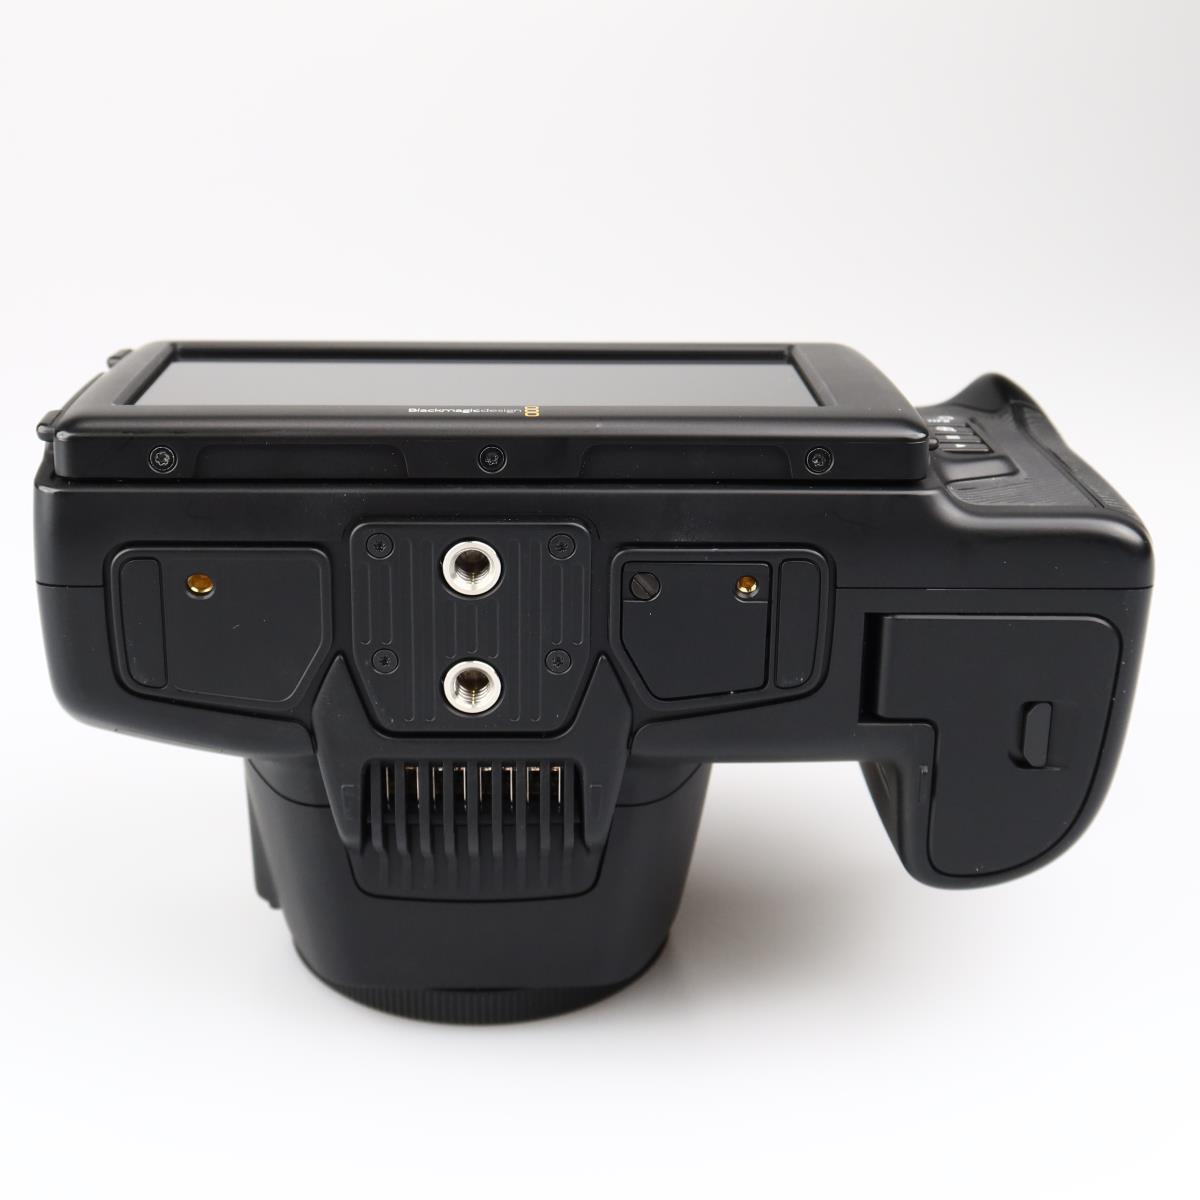 (Myyty) Blackmagic Pocket Cinema Camera 6K Pro (käytetty) sis. ALV